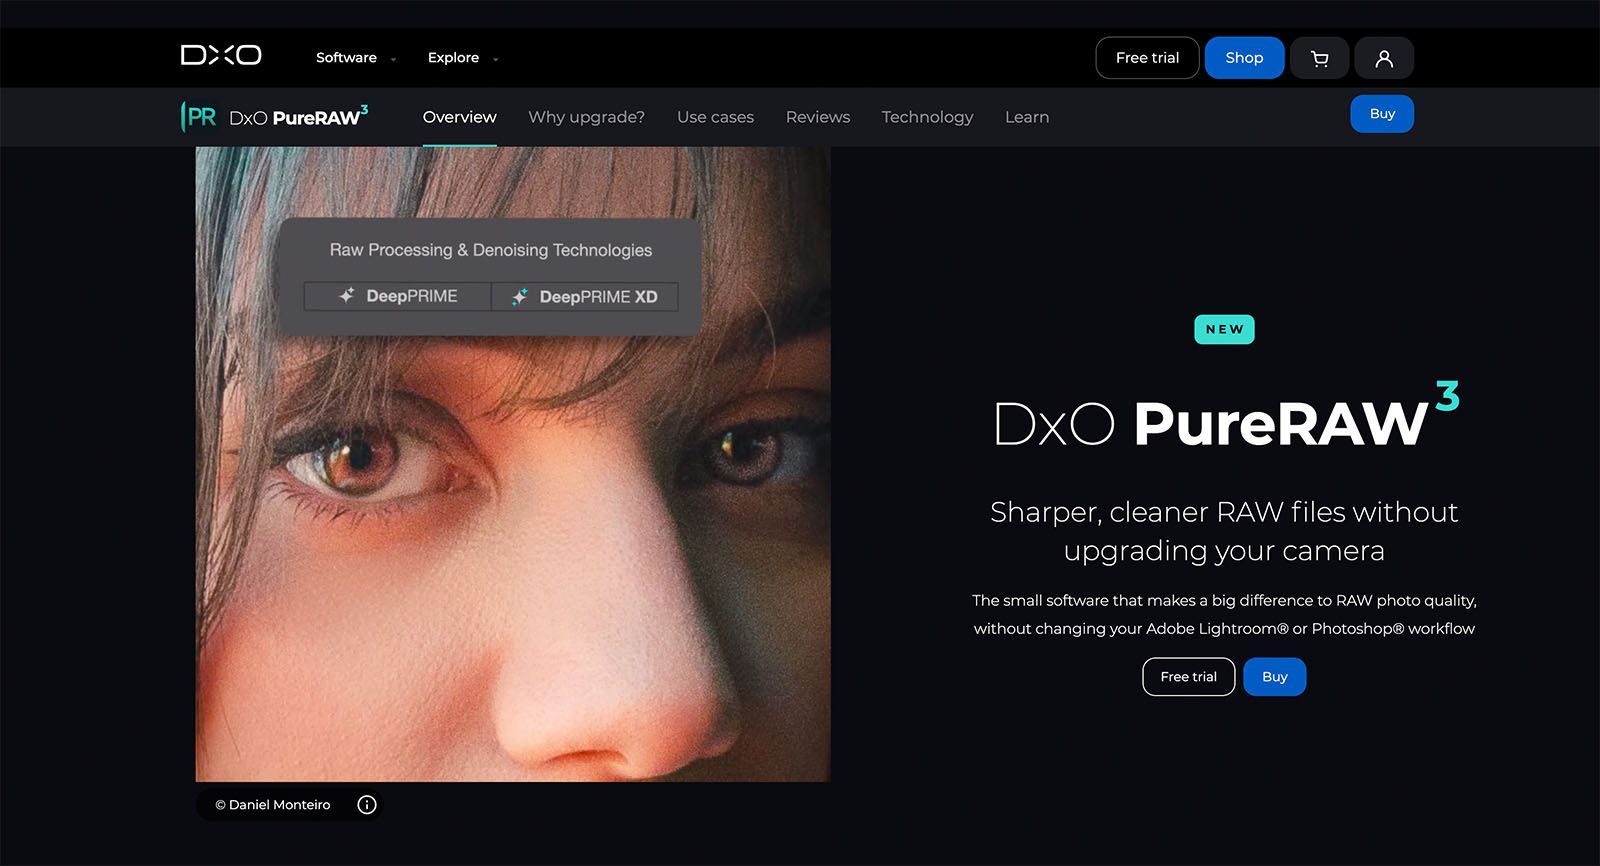 DxO PureRAW Free Trial has not watermark